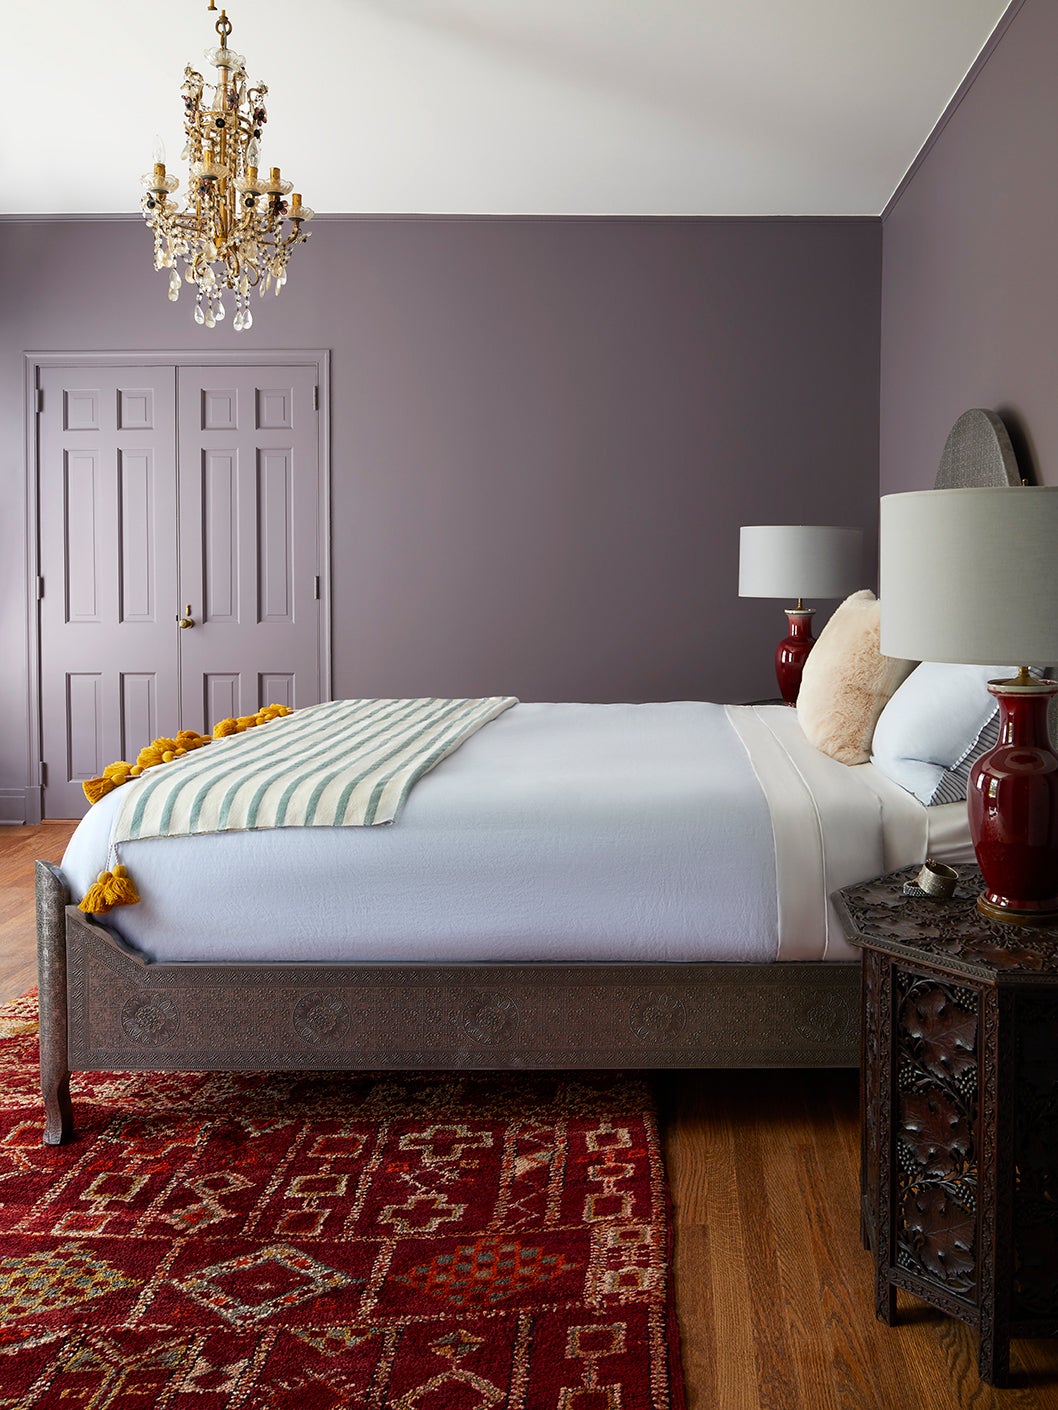 lilac bedroom